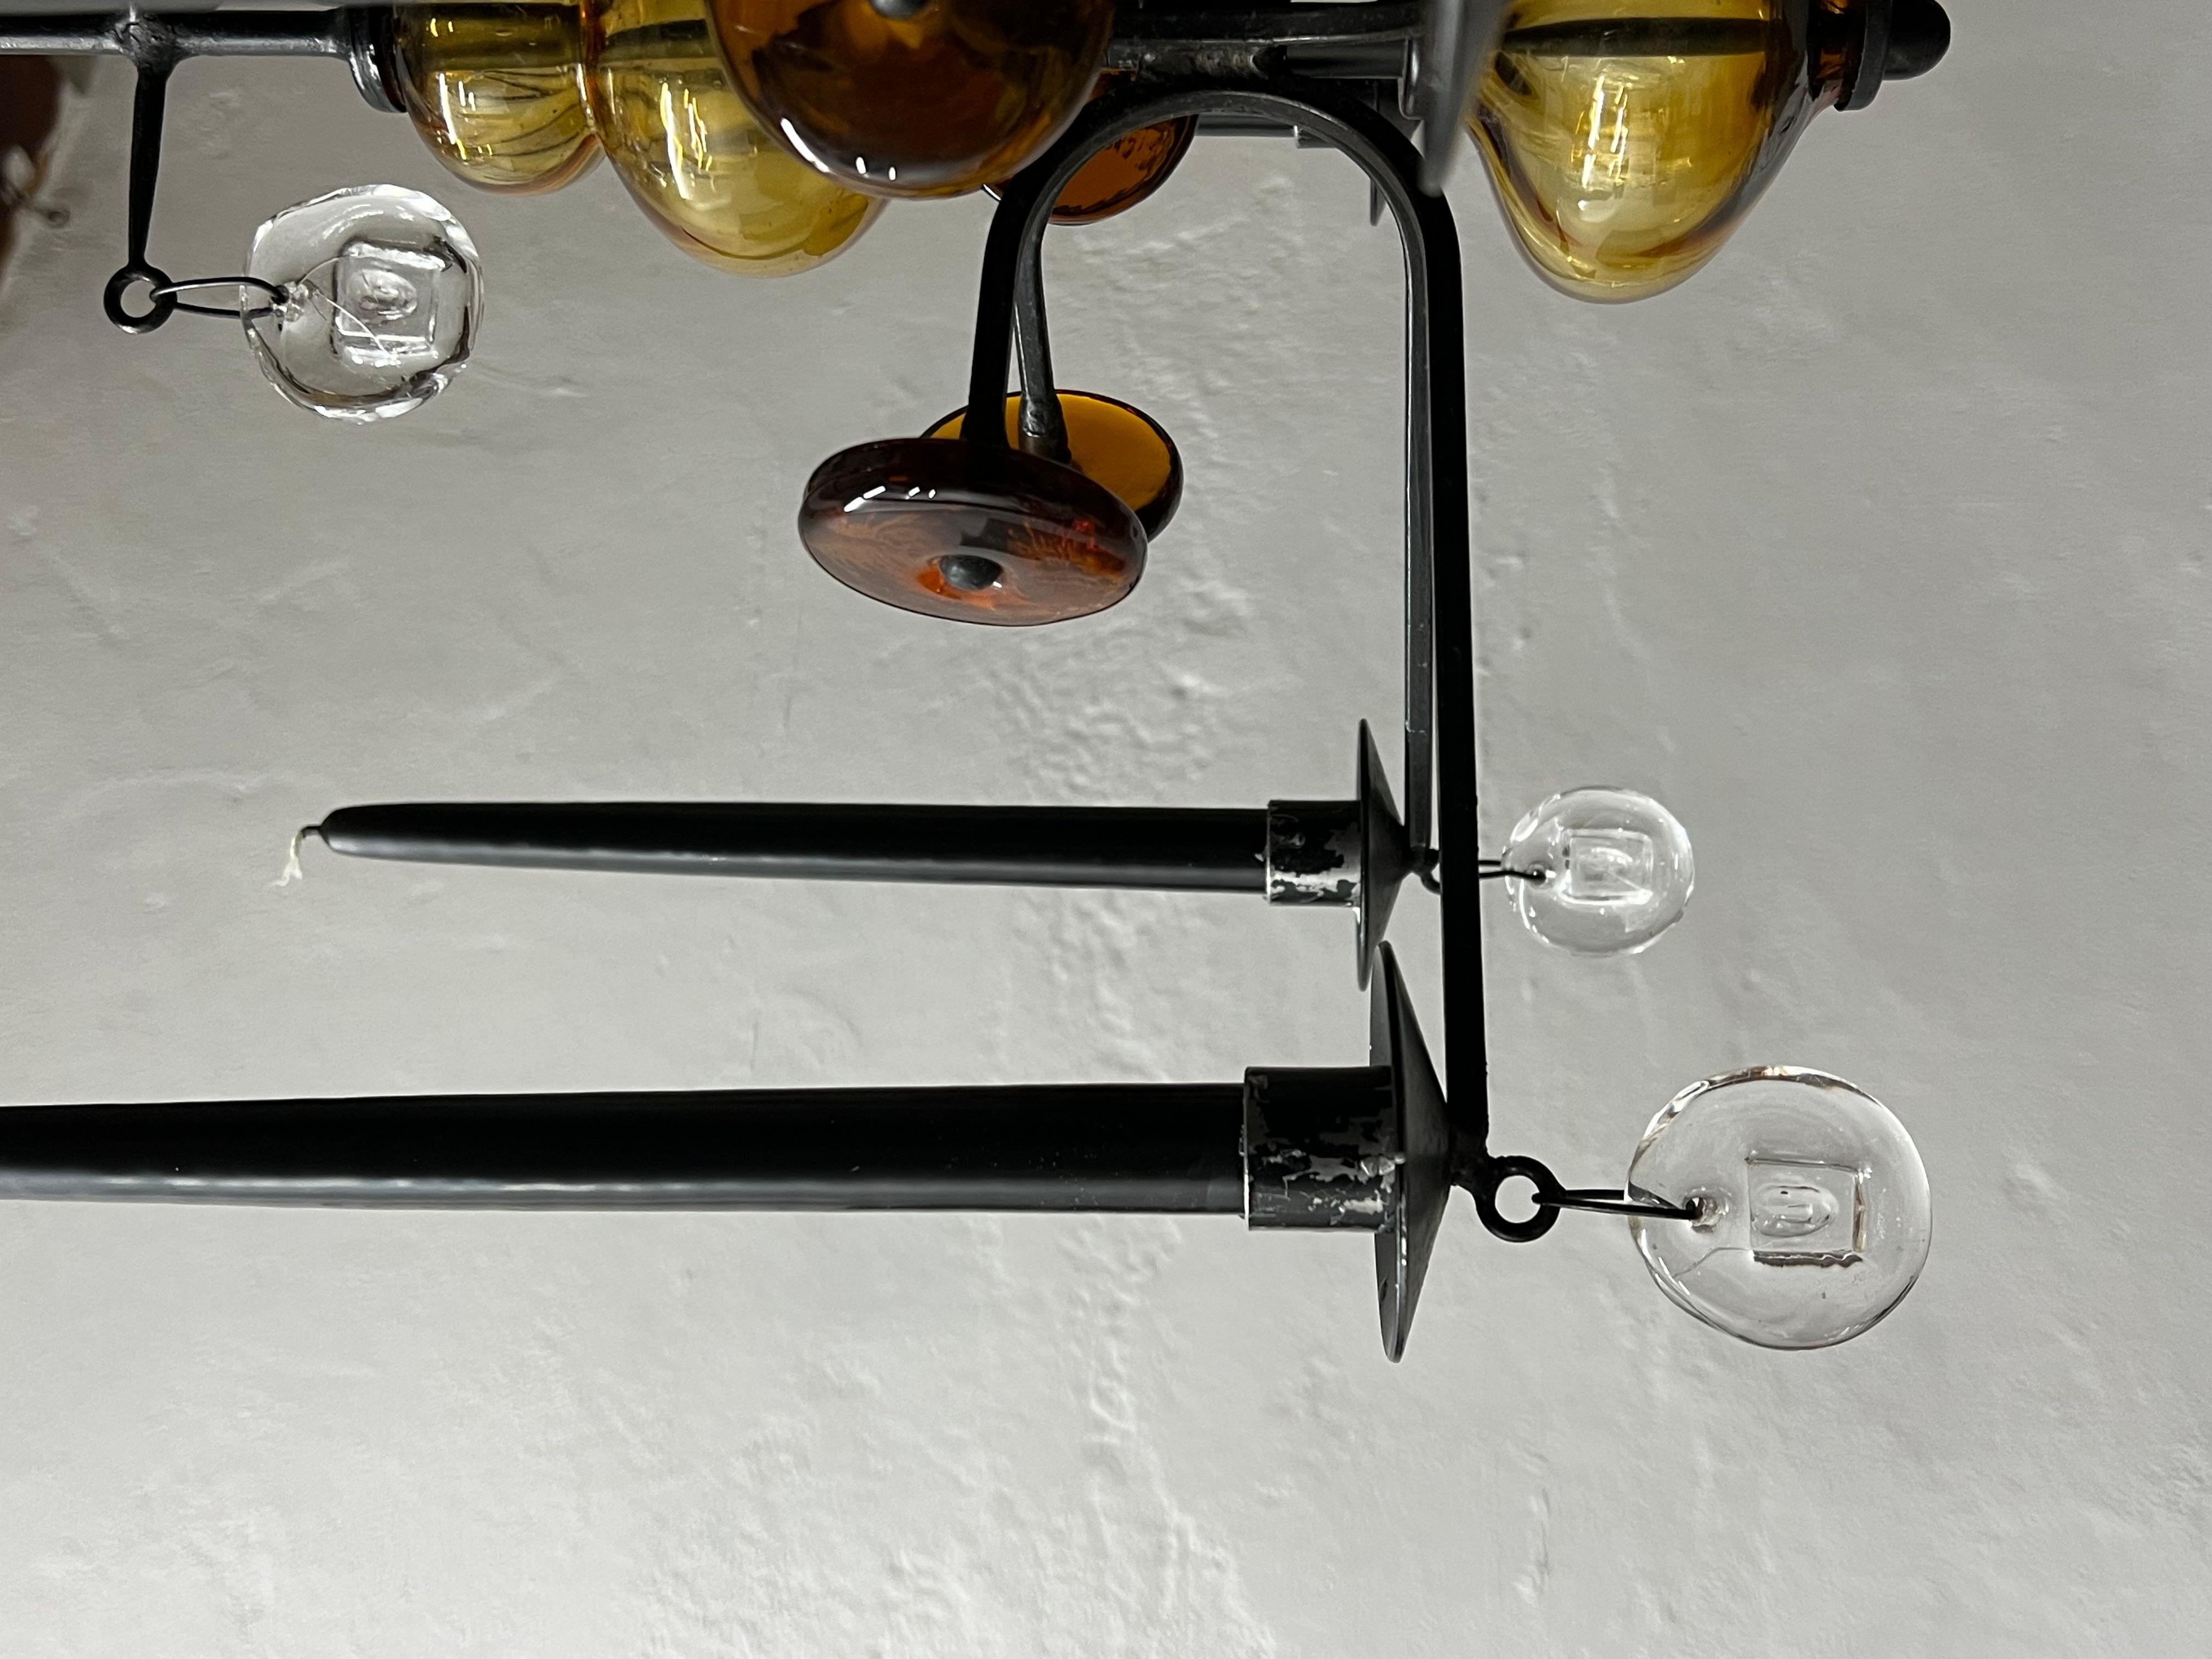 Vintage art glass chandelier designed by Erik Höglund for Boda in the 1970s.
Measurements: H (full / chandelier) 105 / 40 cm, D 46 cm.